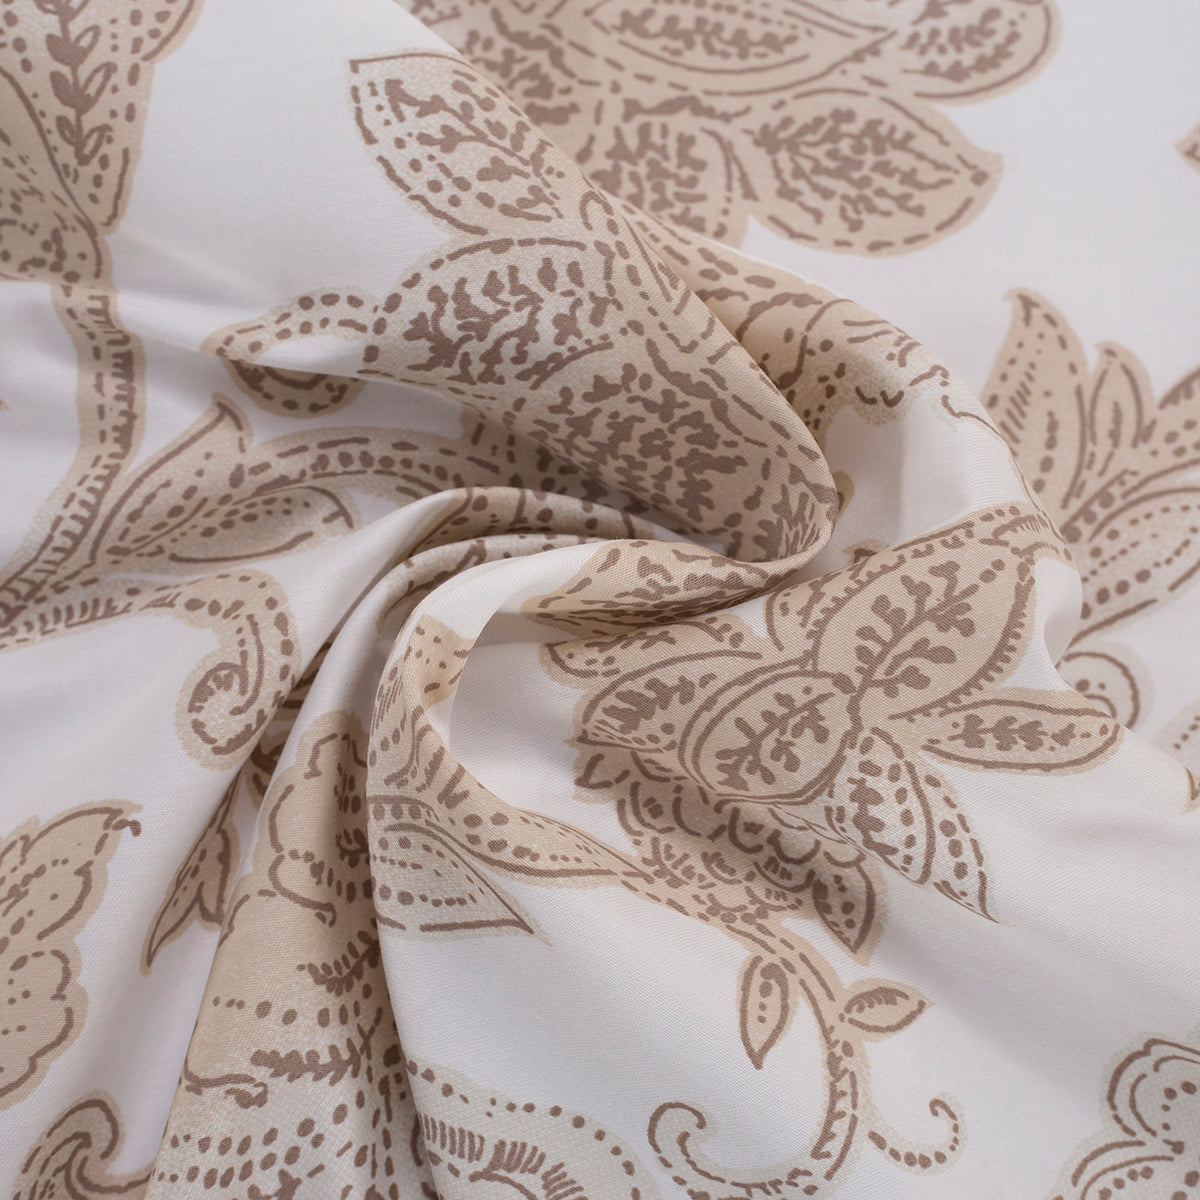 Art Nouveau Mabel Printed 100% Cotton Neutral Soft Bed Sheet